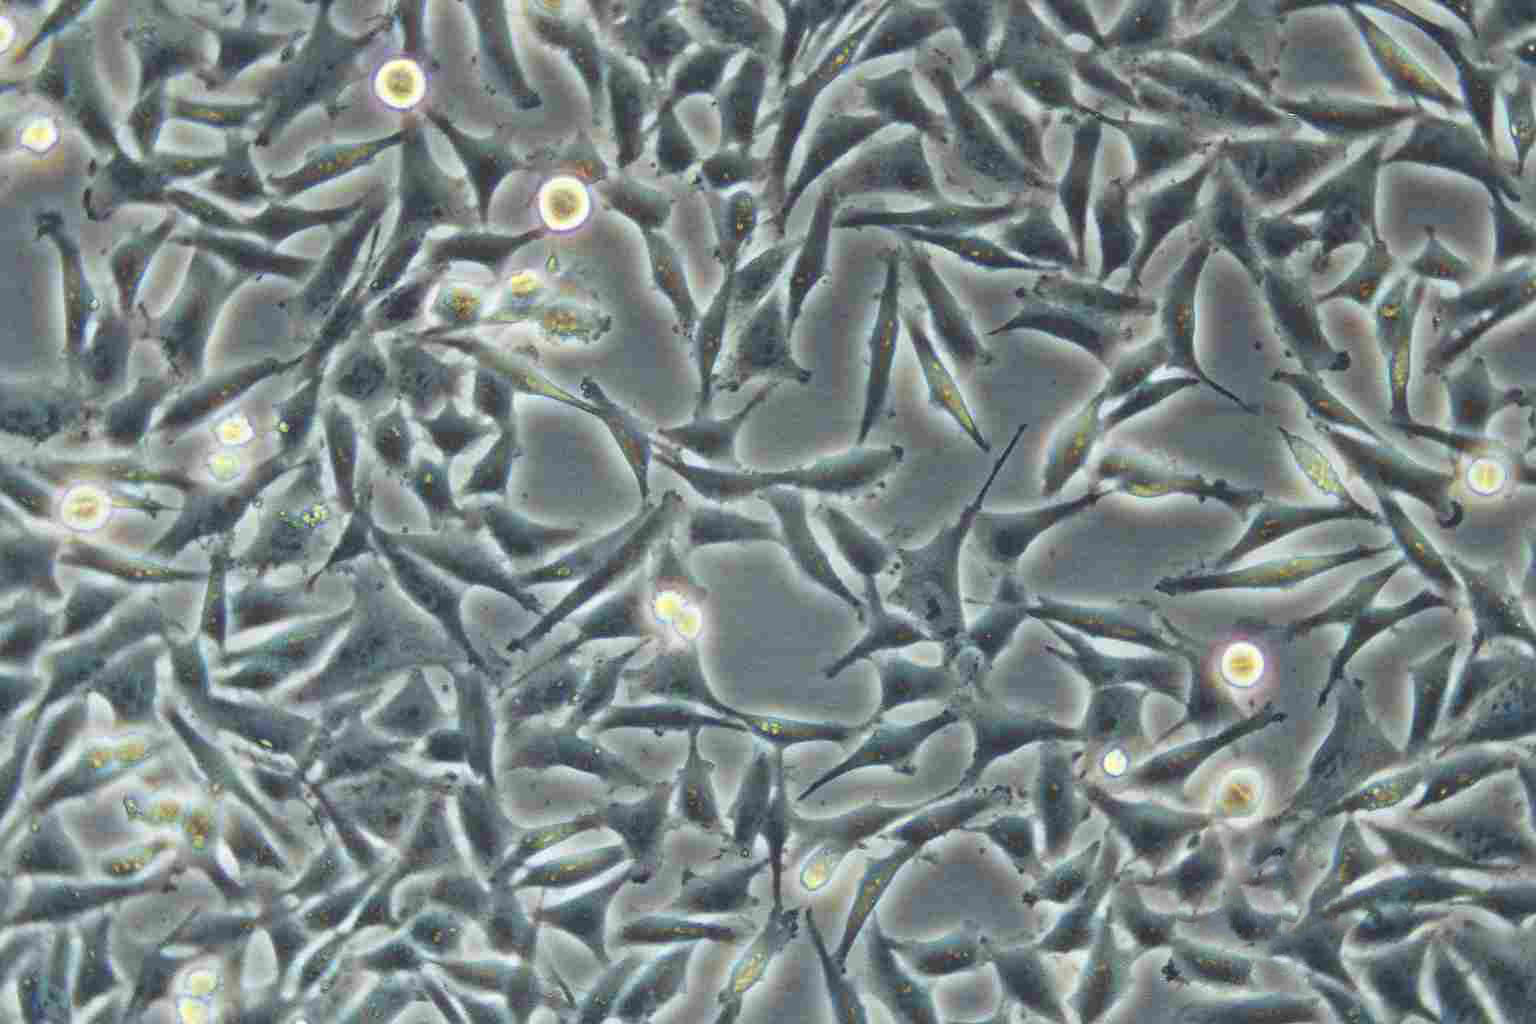 CCK-81 epithelioid cells人结肠癌腺癌细胞系,CCK-81 epithelioid cells